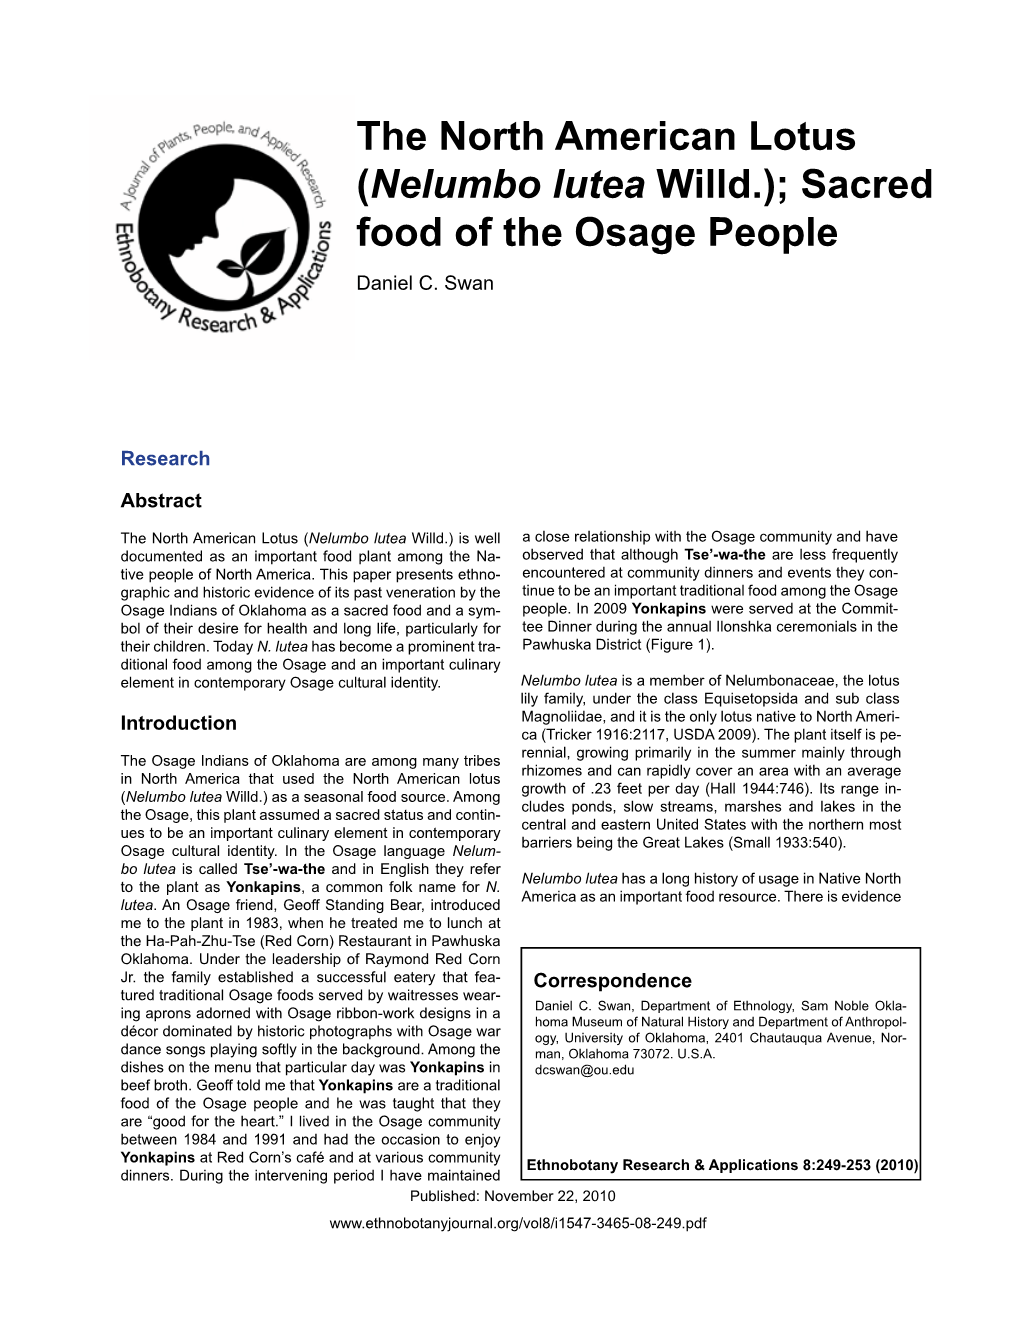 The North American Lotus (Nelumbo Lutea Willd.); Sacred Food of the Osage People Daniel C